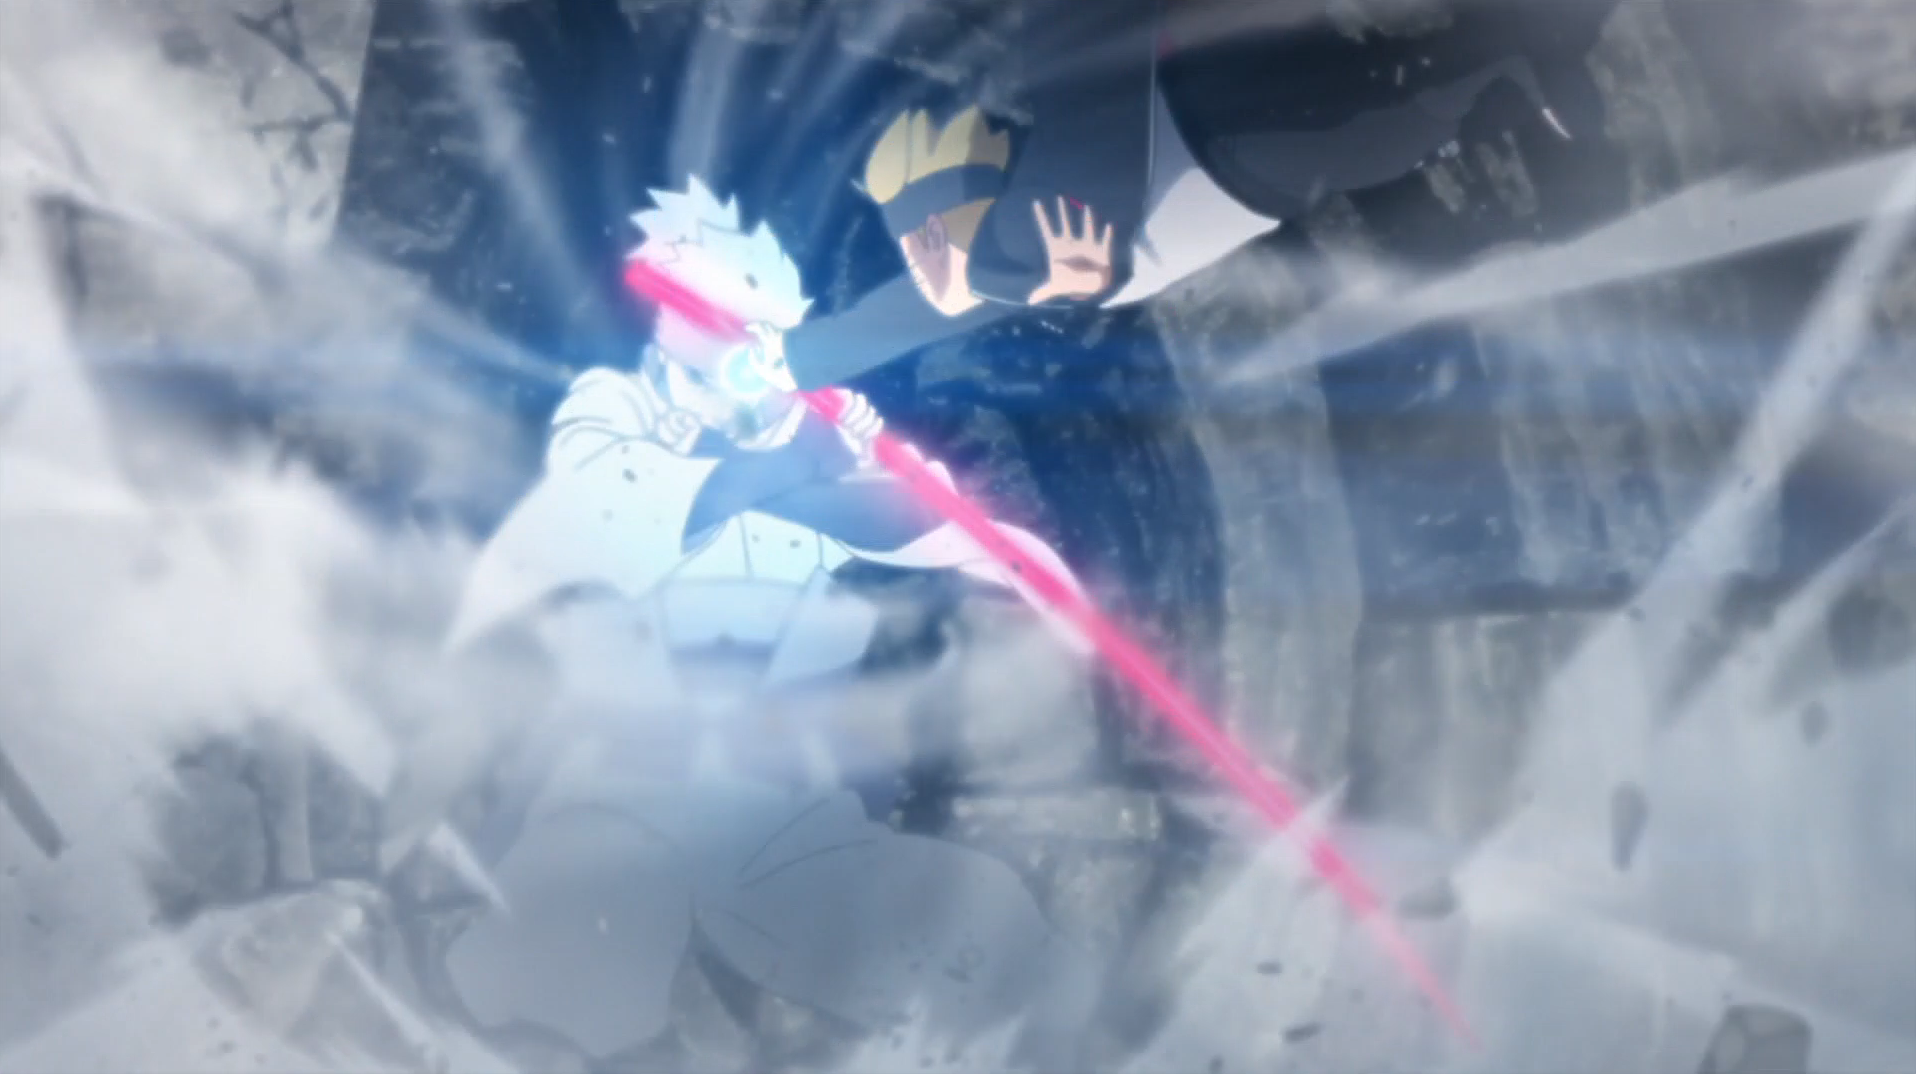 Naruto's Nindo - Boruto Episode 62 spoilers!! Urashiki uses Rinnegan -  Mitsuki activates Sage Mode but Urashiki absorbs all the chakra. - Urashiki  absorbed Gaara's chakra and can use his Sand jutsu.